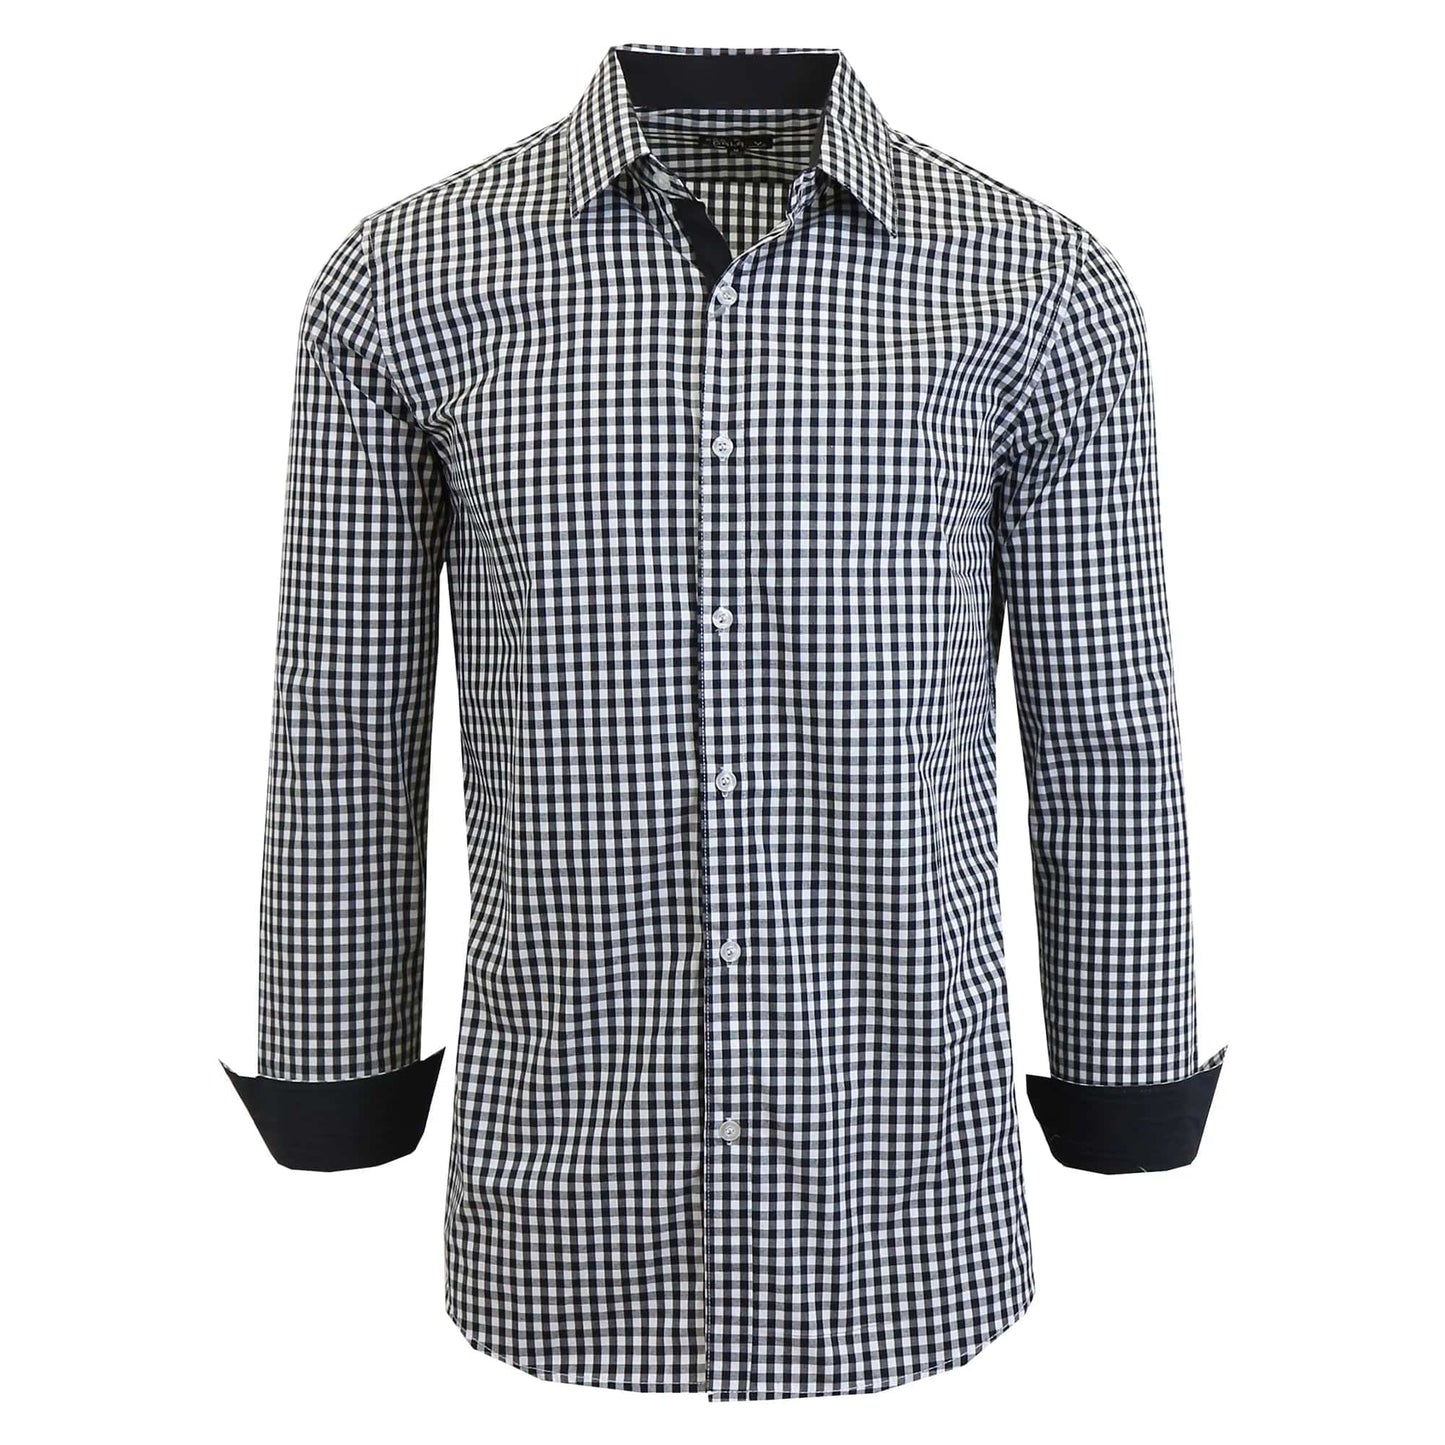 Men's Long Sleeve Slim Fit Dress Shirts (S-2XL) - GalaxybyHarvic